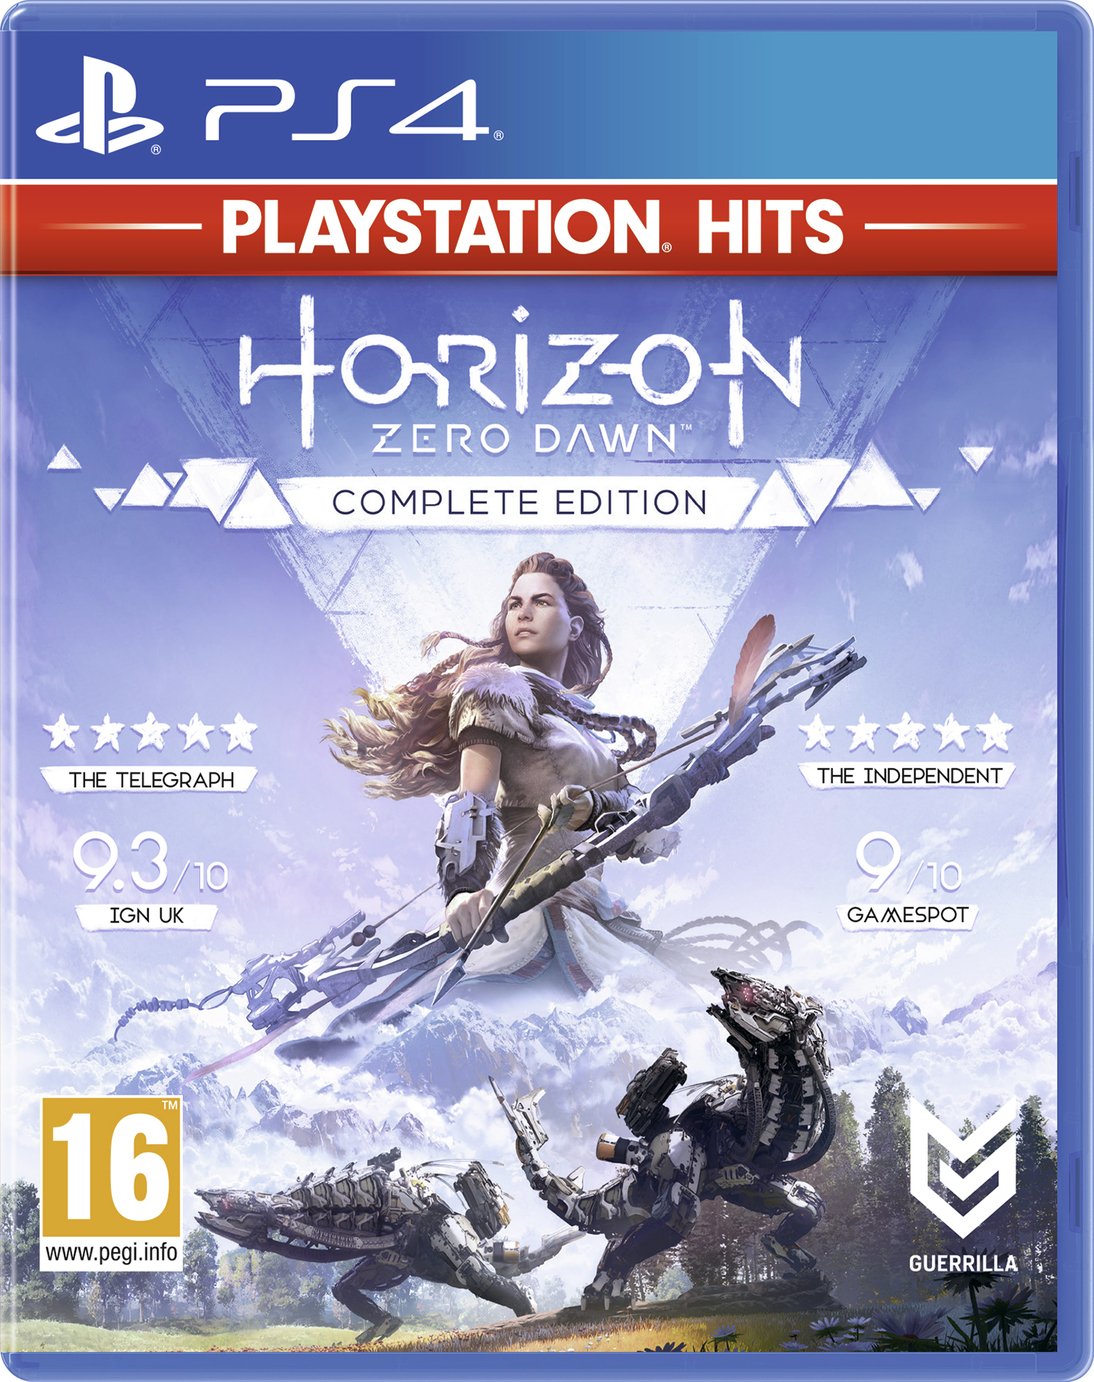 Horizon Zero Dawn PS4 Hits Game Review